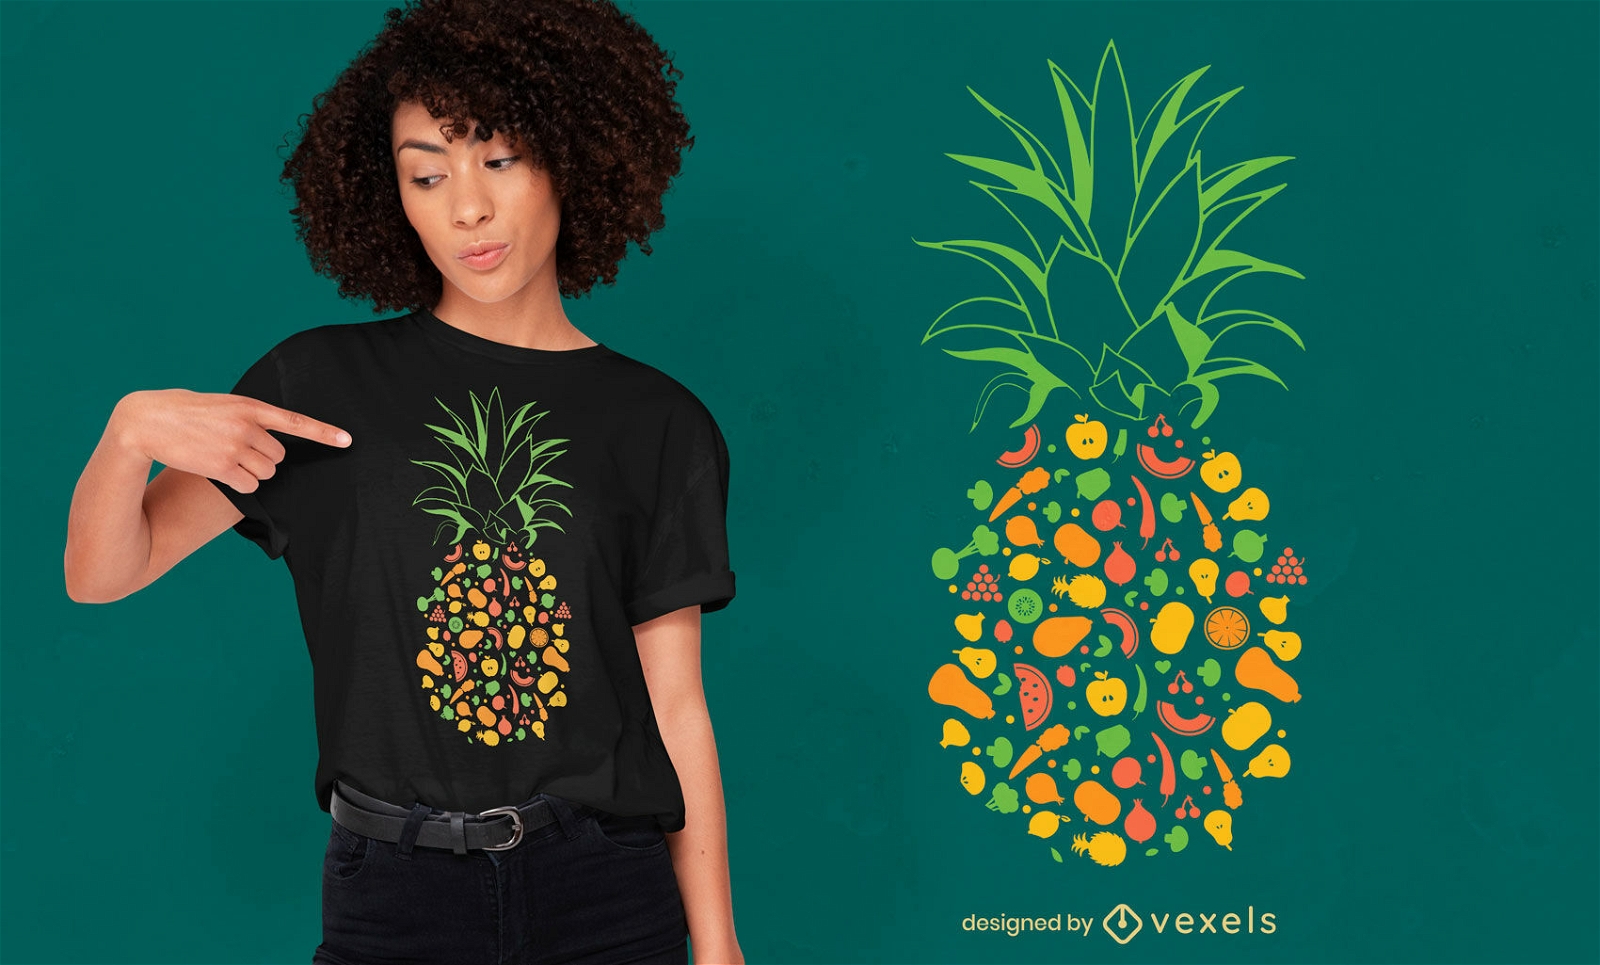 Dise?o de camiseta de pi?a hecha de frutas.